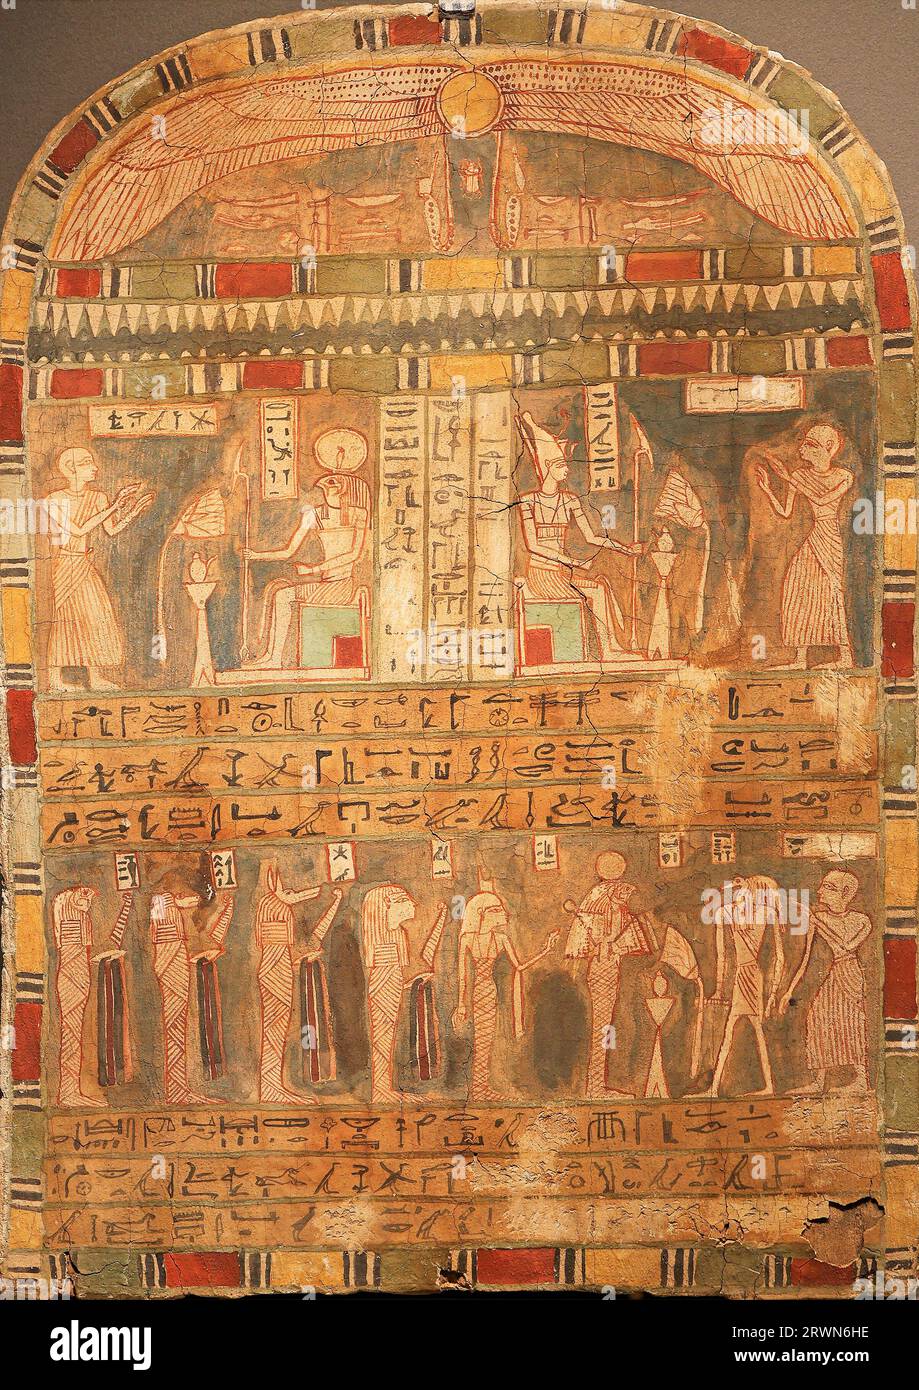 Stele funeraria in legno di Pakhery, periodo Sainte, Egitto, 685-525 a.C. Foto Stock